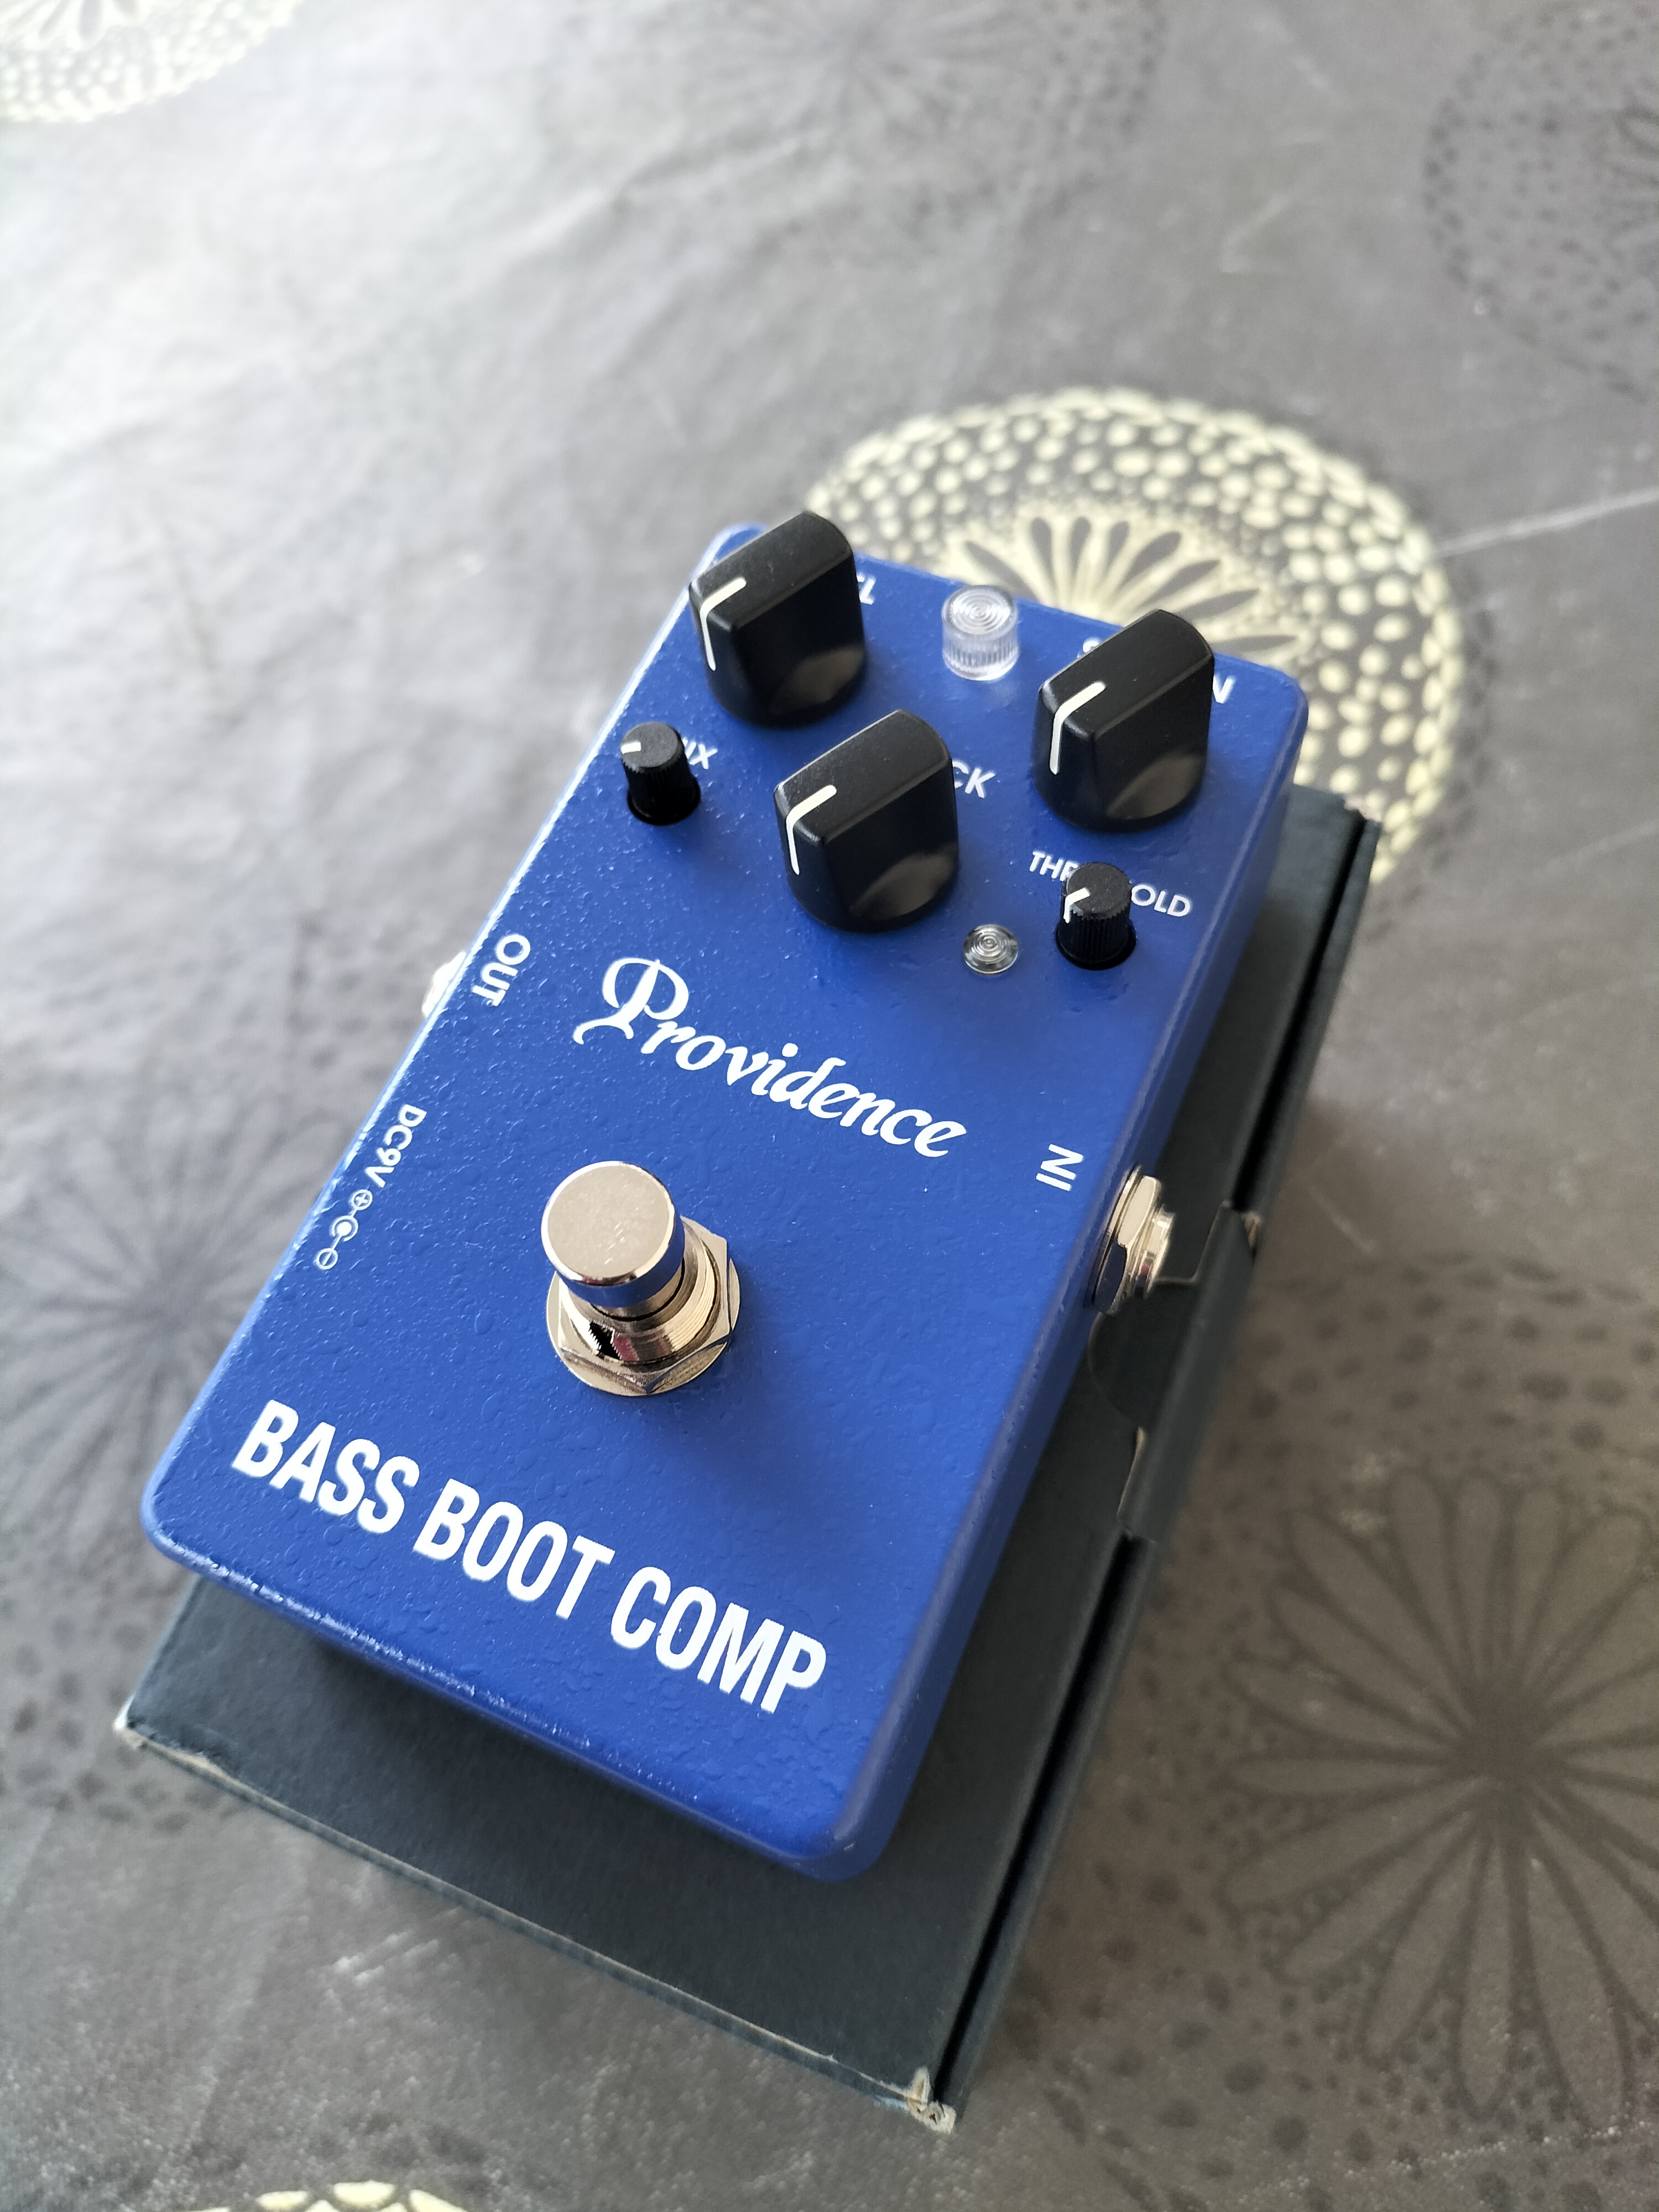 Bass Boot Comp BTC-1 - Providence Bass Boot Comp BTC-1 - Audiofanzine